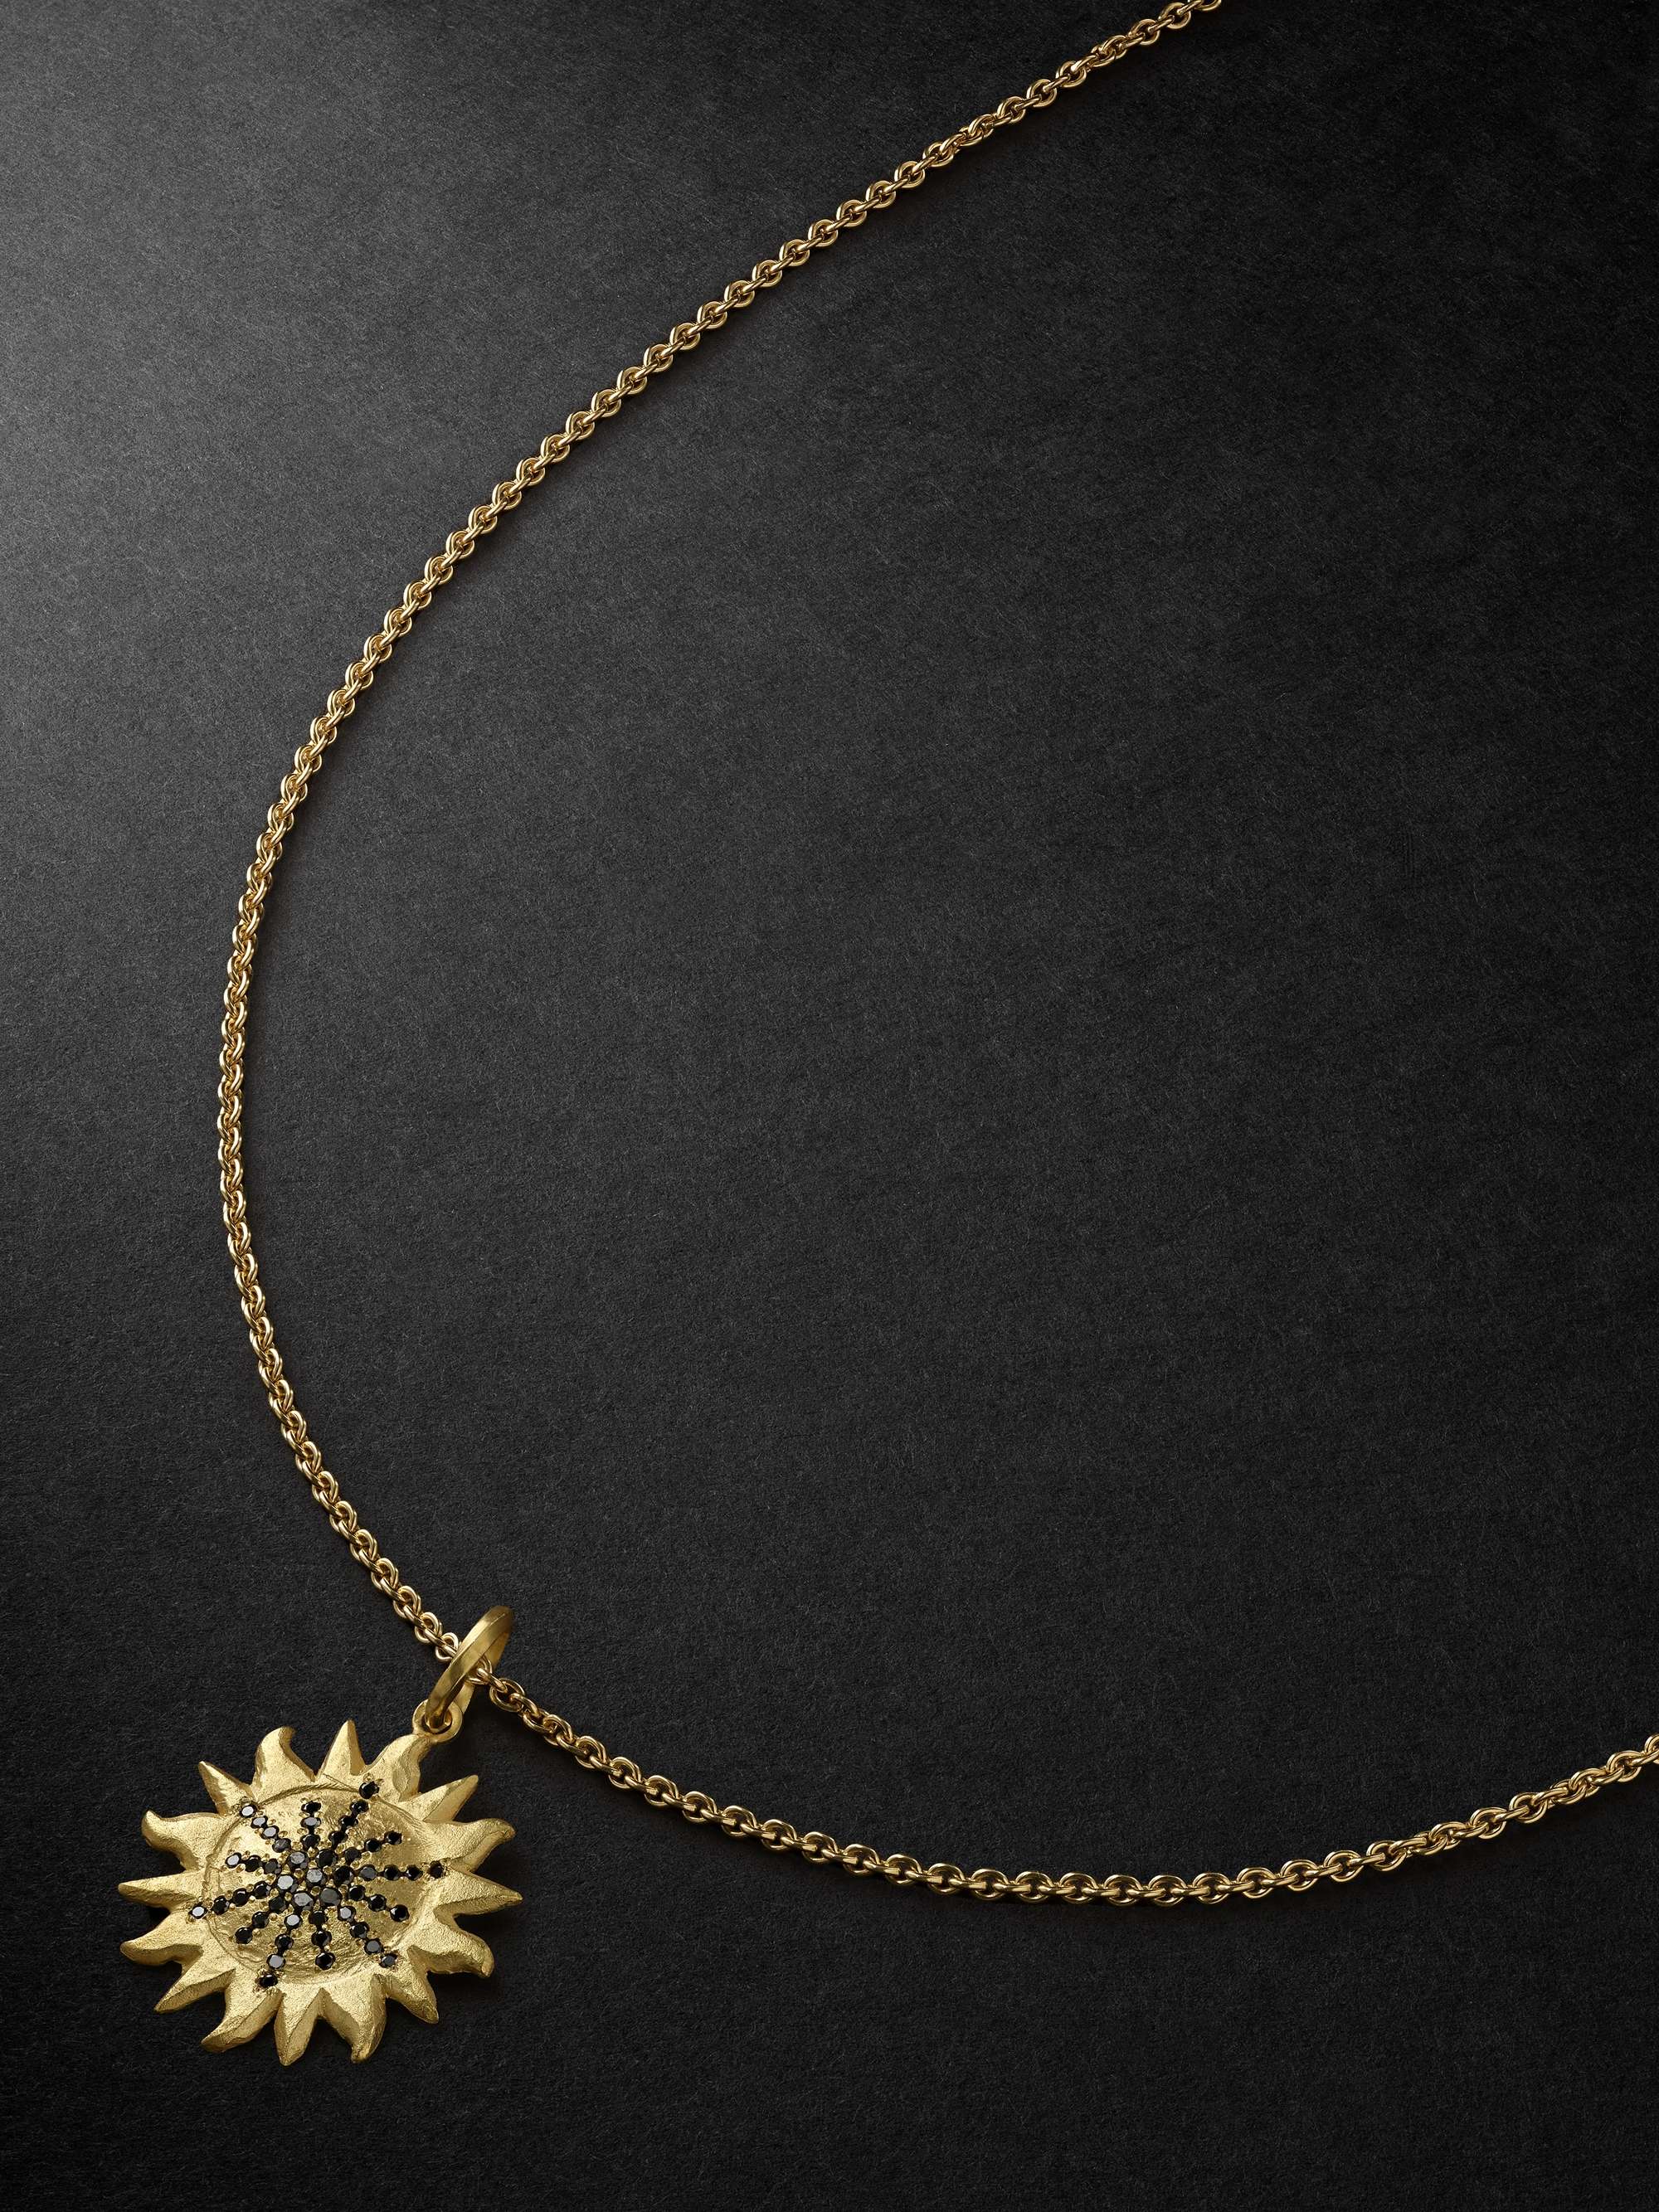 ELHANATI The Sun Gold Diamond Necklace